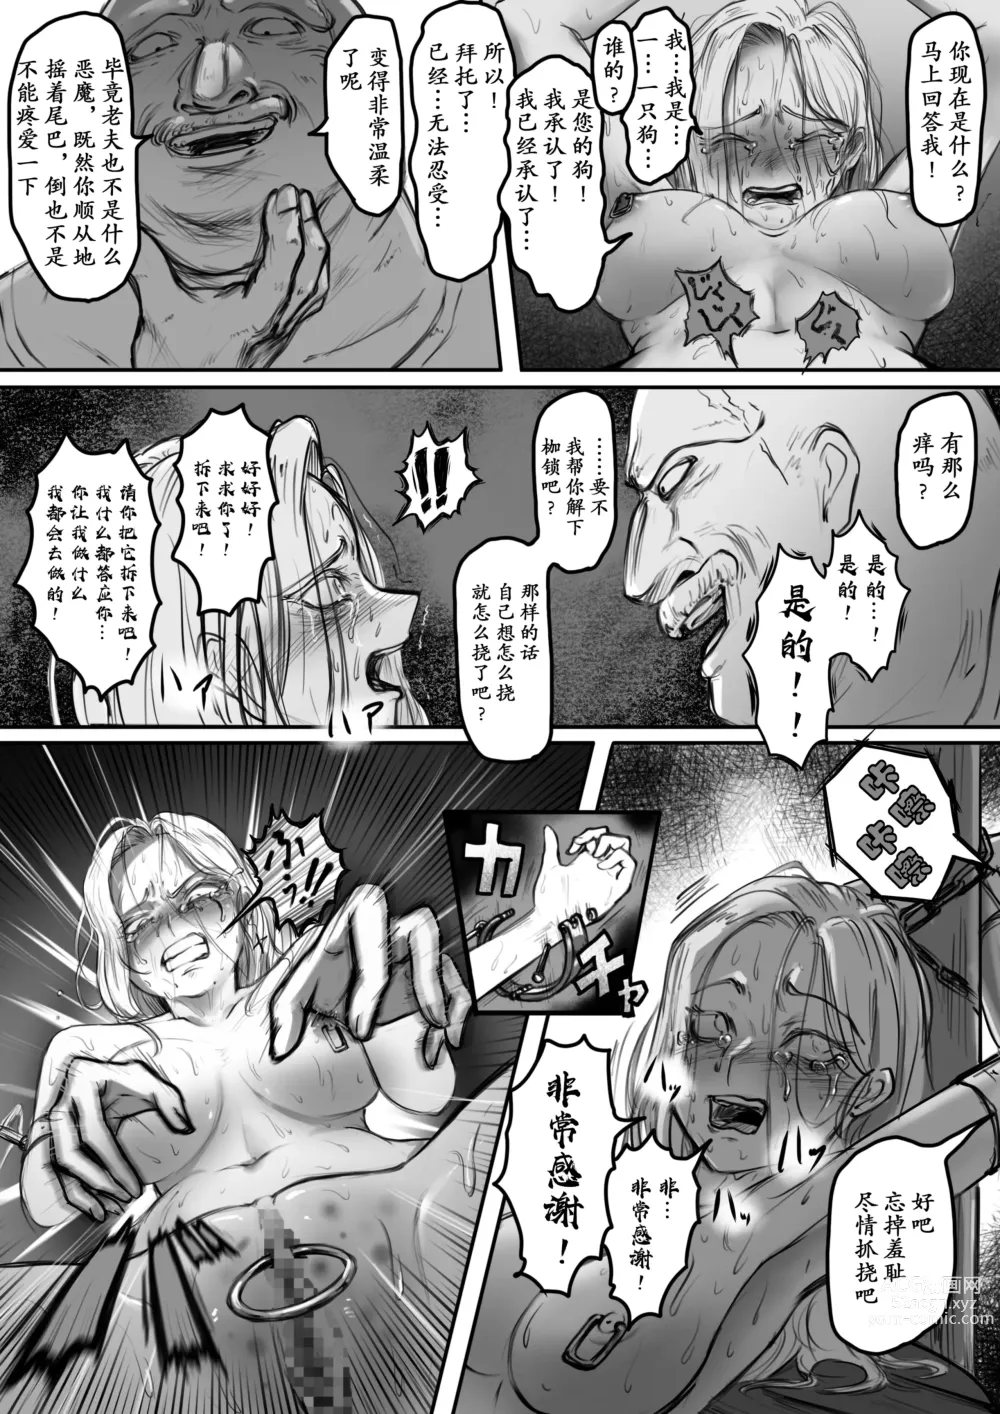 Page 21 of doujinshi 骑士的骄傲永不消逝